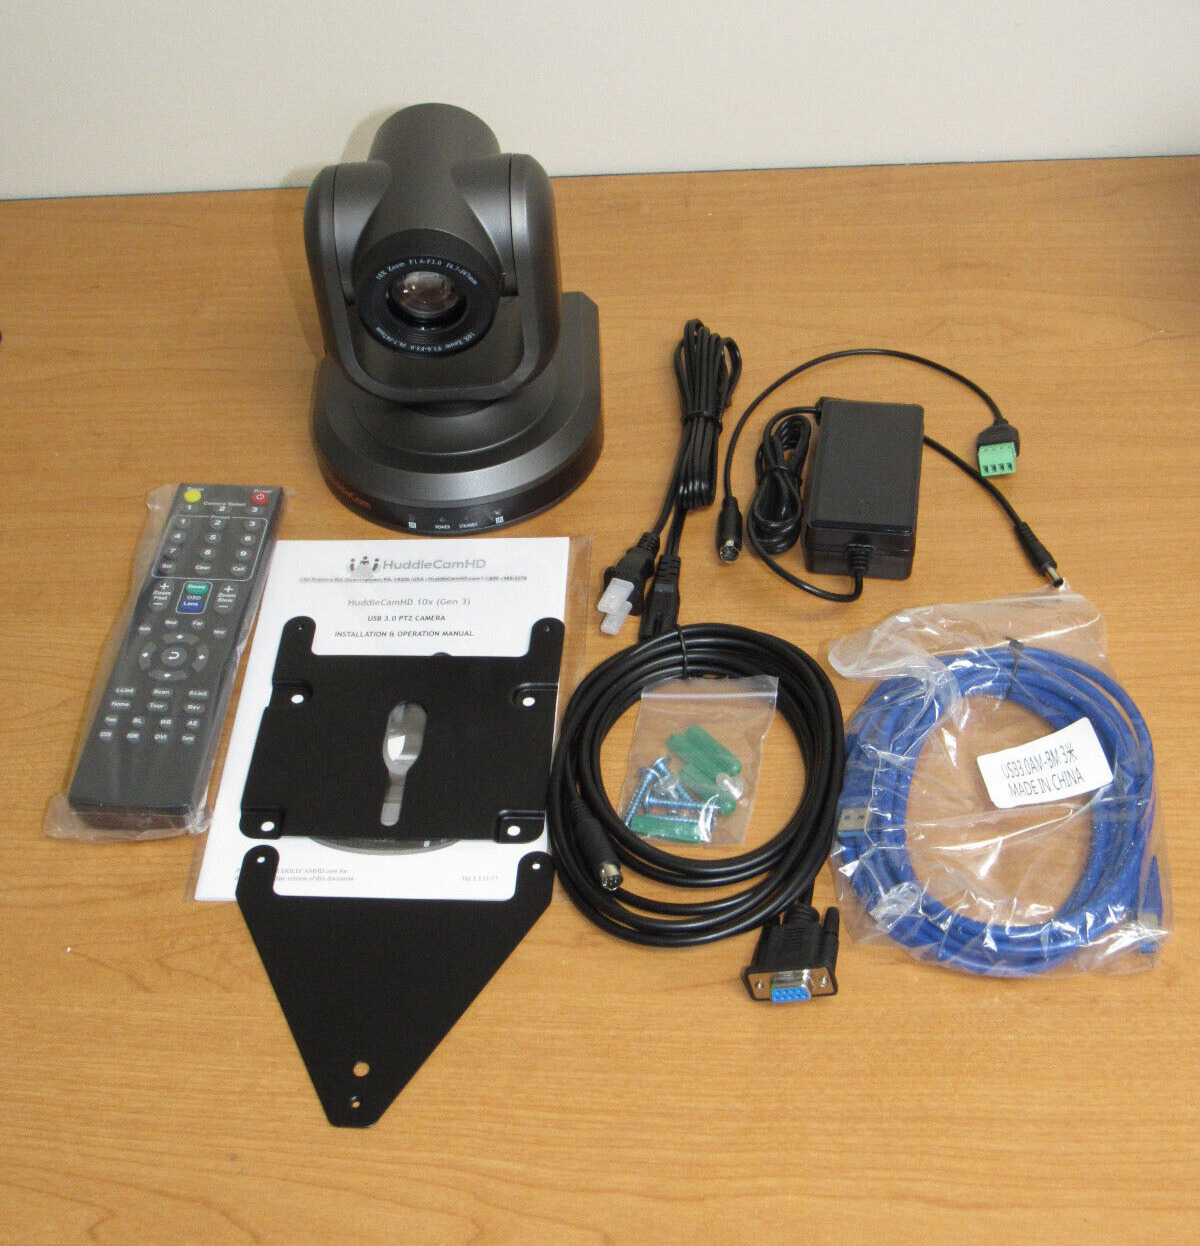 HuddleCamHD USB 3.0 10x Optical Conference PTZ Camera HC10X-GY-G3 w/ Accessories